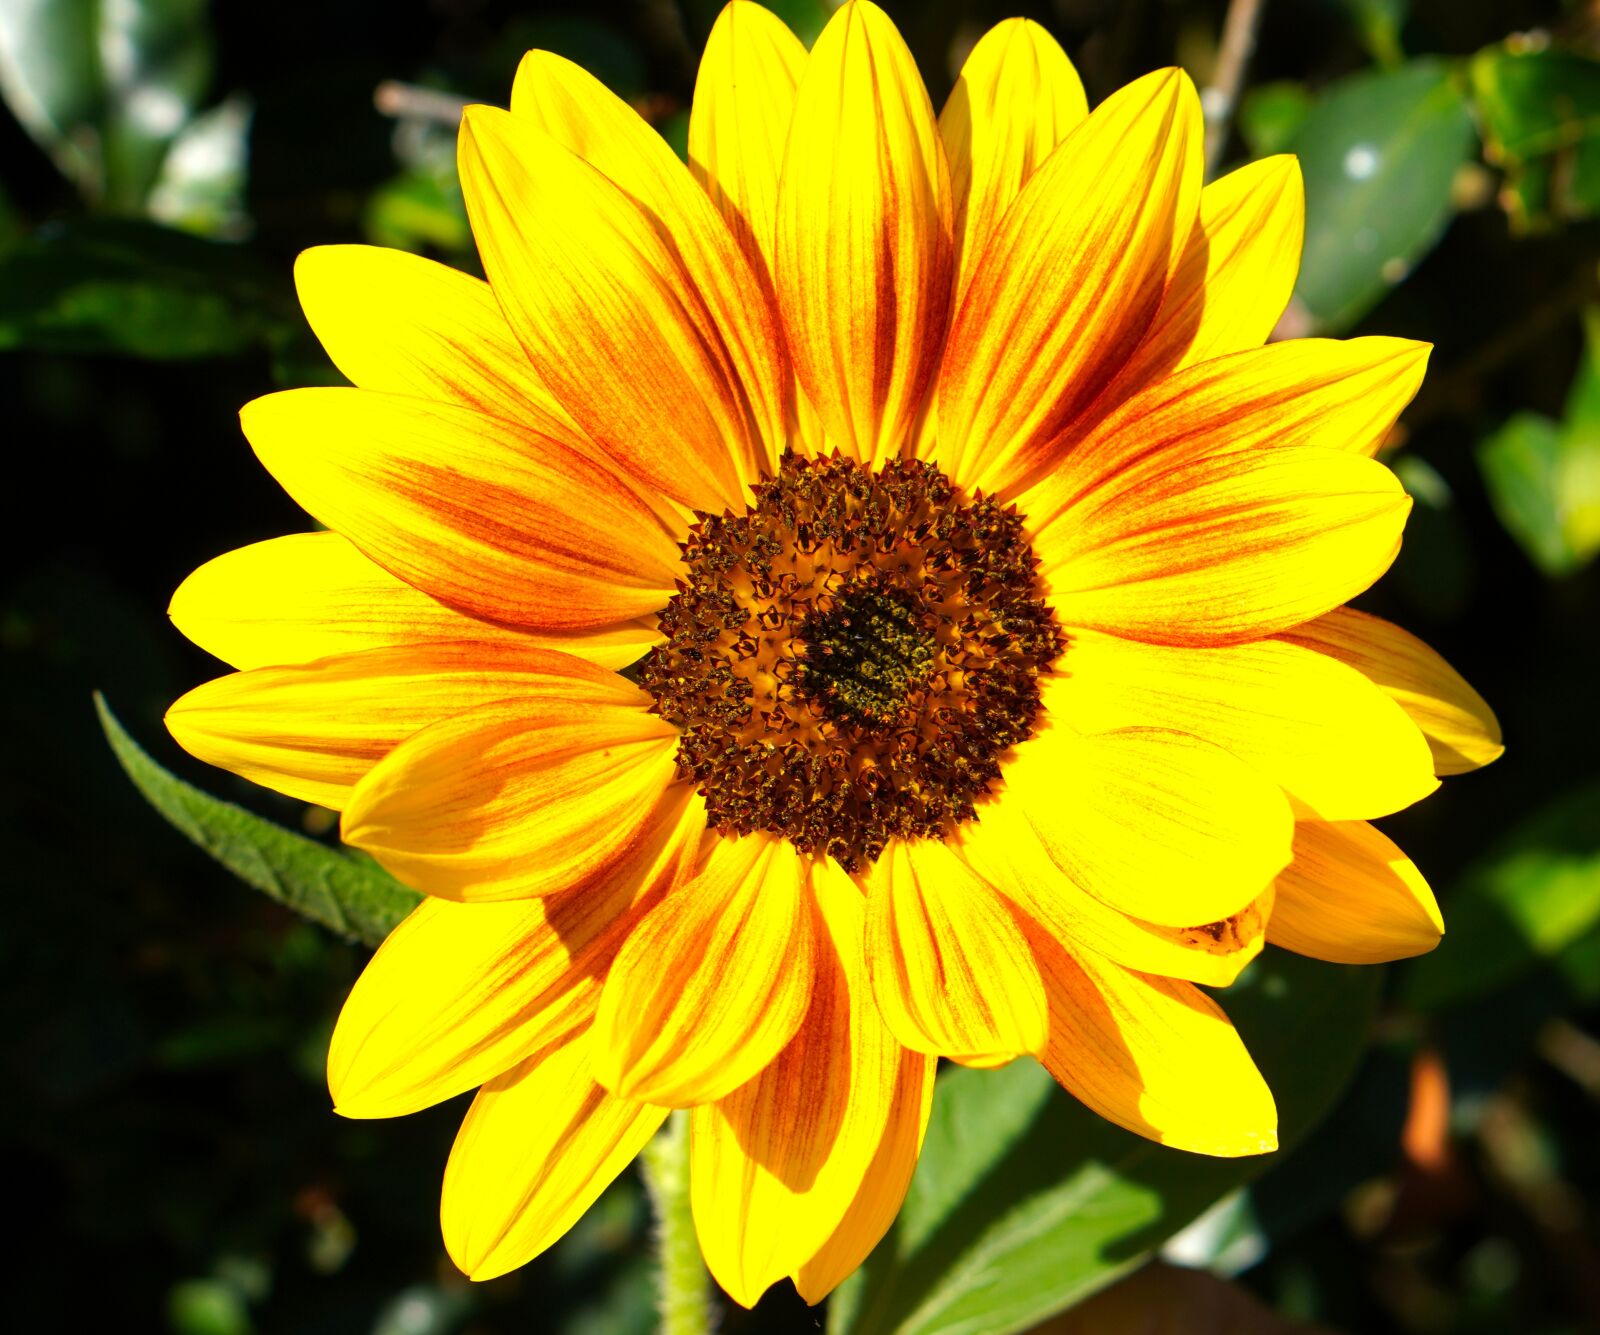 Sony a6400 sample photo. Flower, sunflower, blossom photography